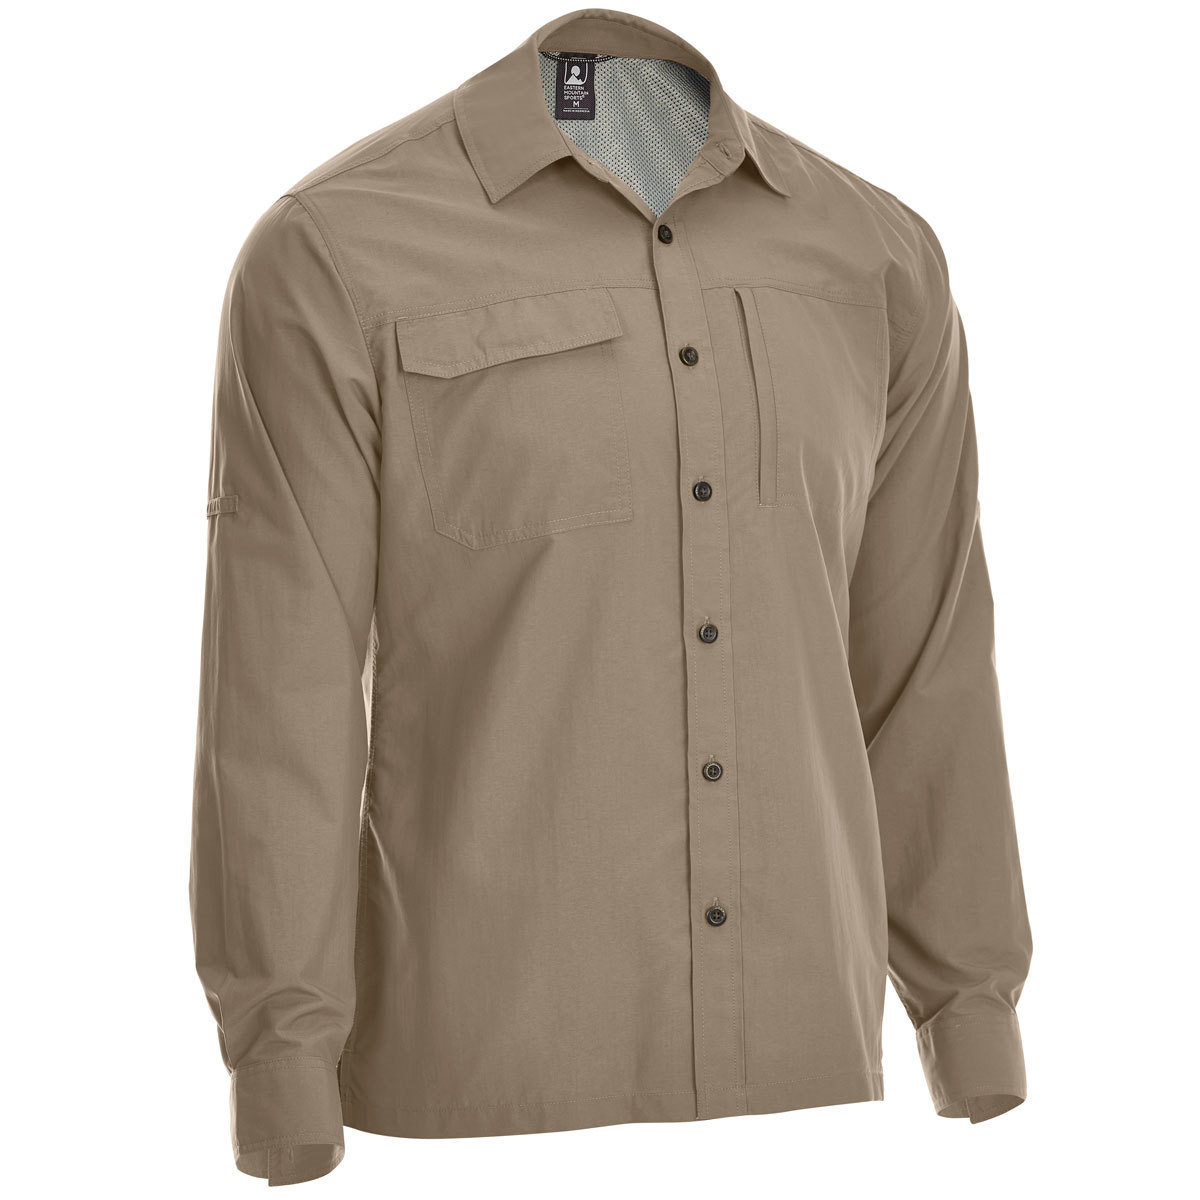 Ems Men's Trailhead Upf Long-Sleeve Shirt - Brown, S